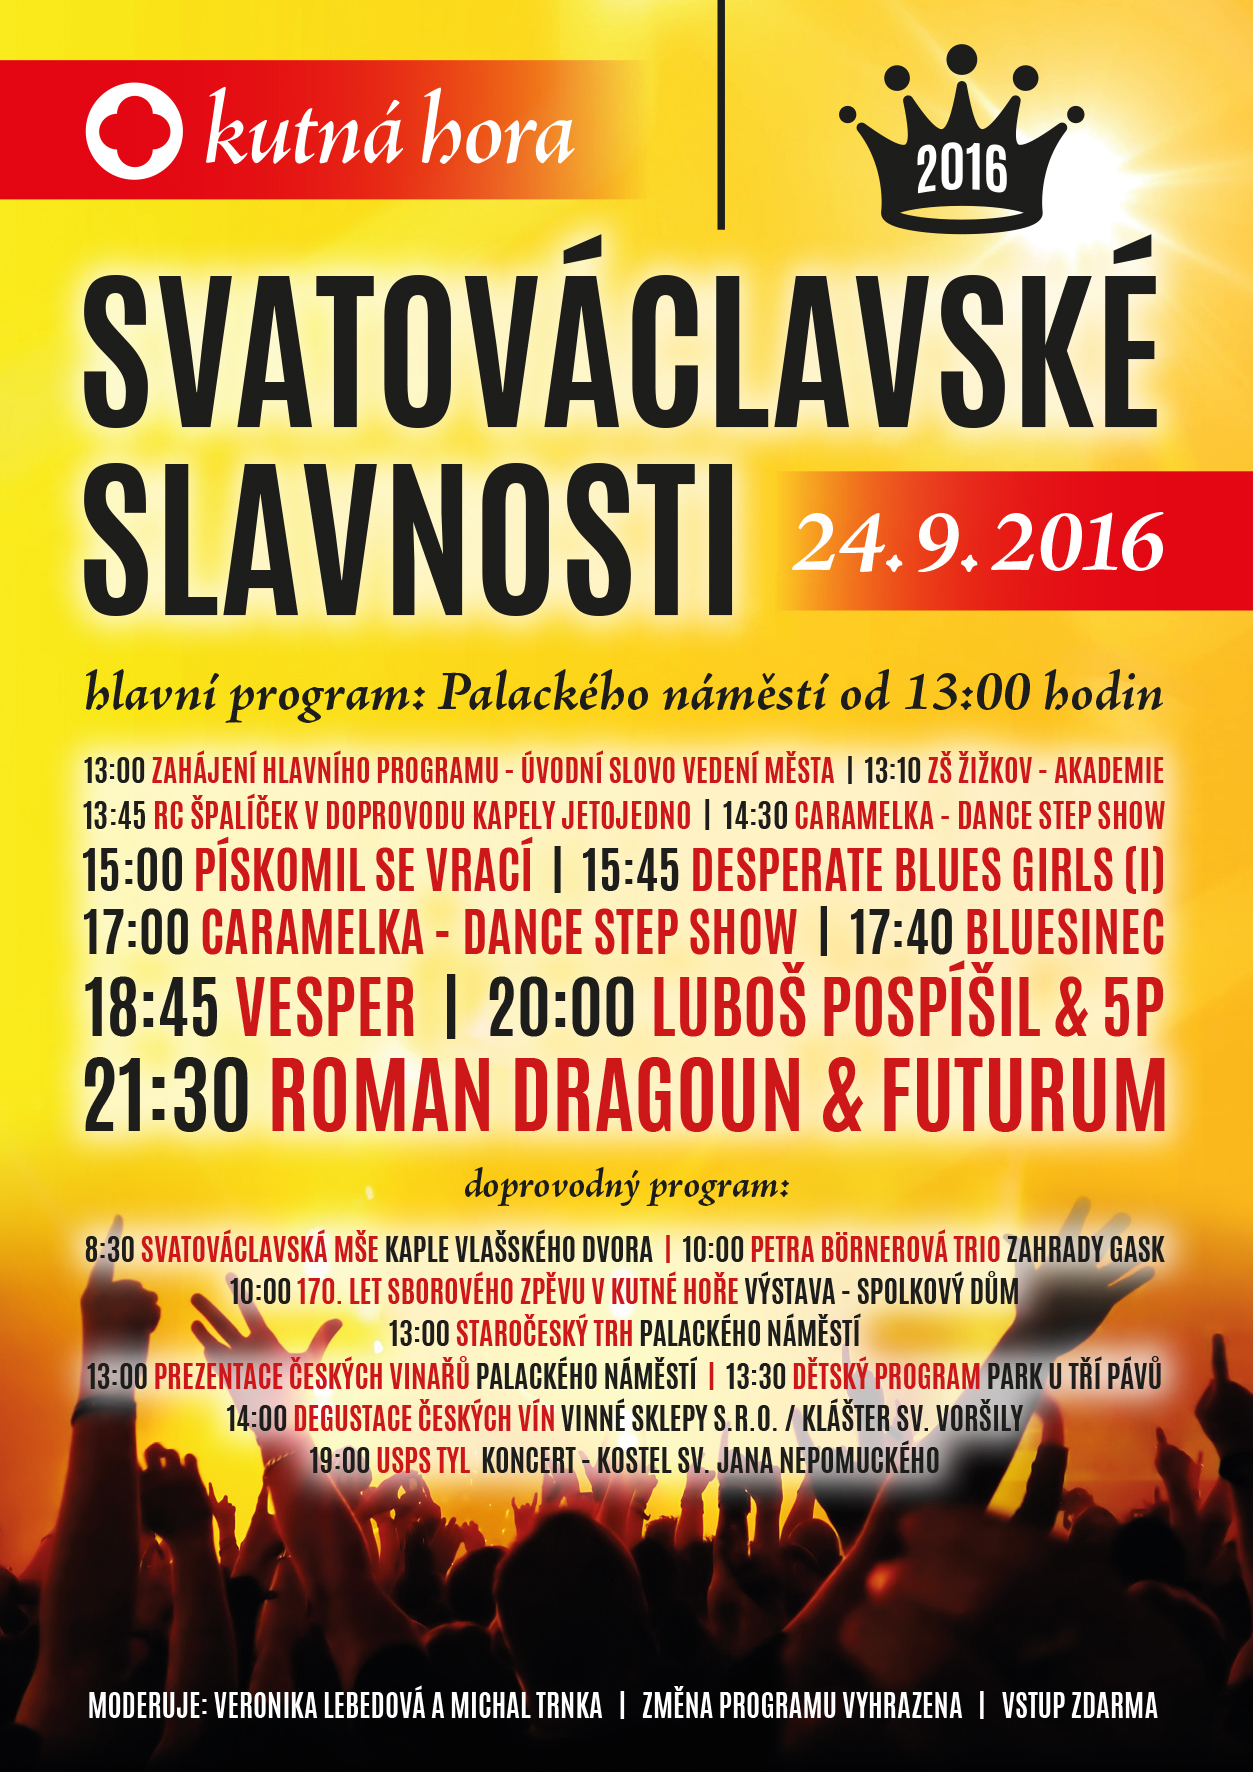 805-svatovaclavske-slavnosti-plakat-final.jpg